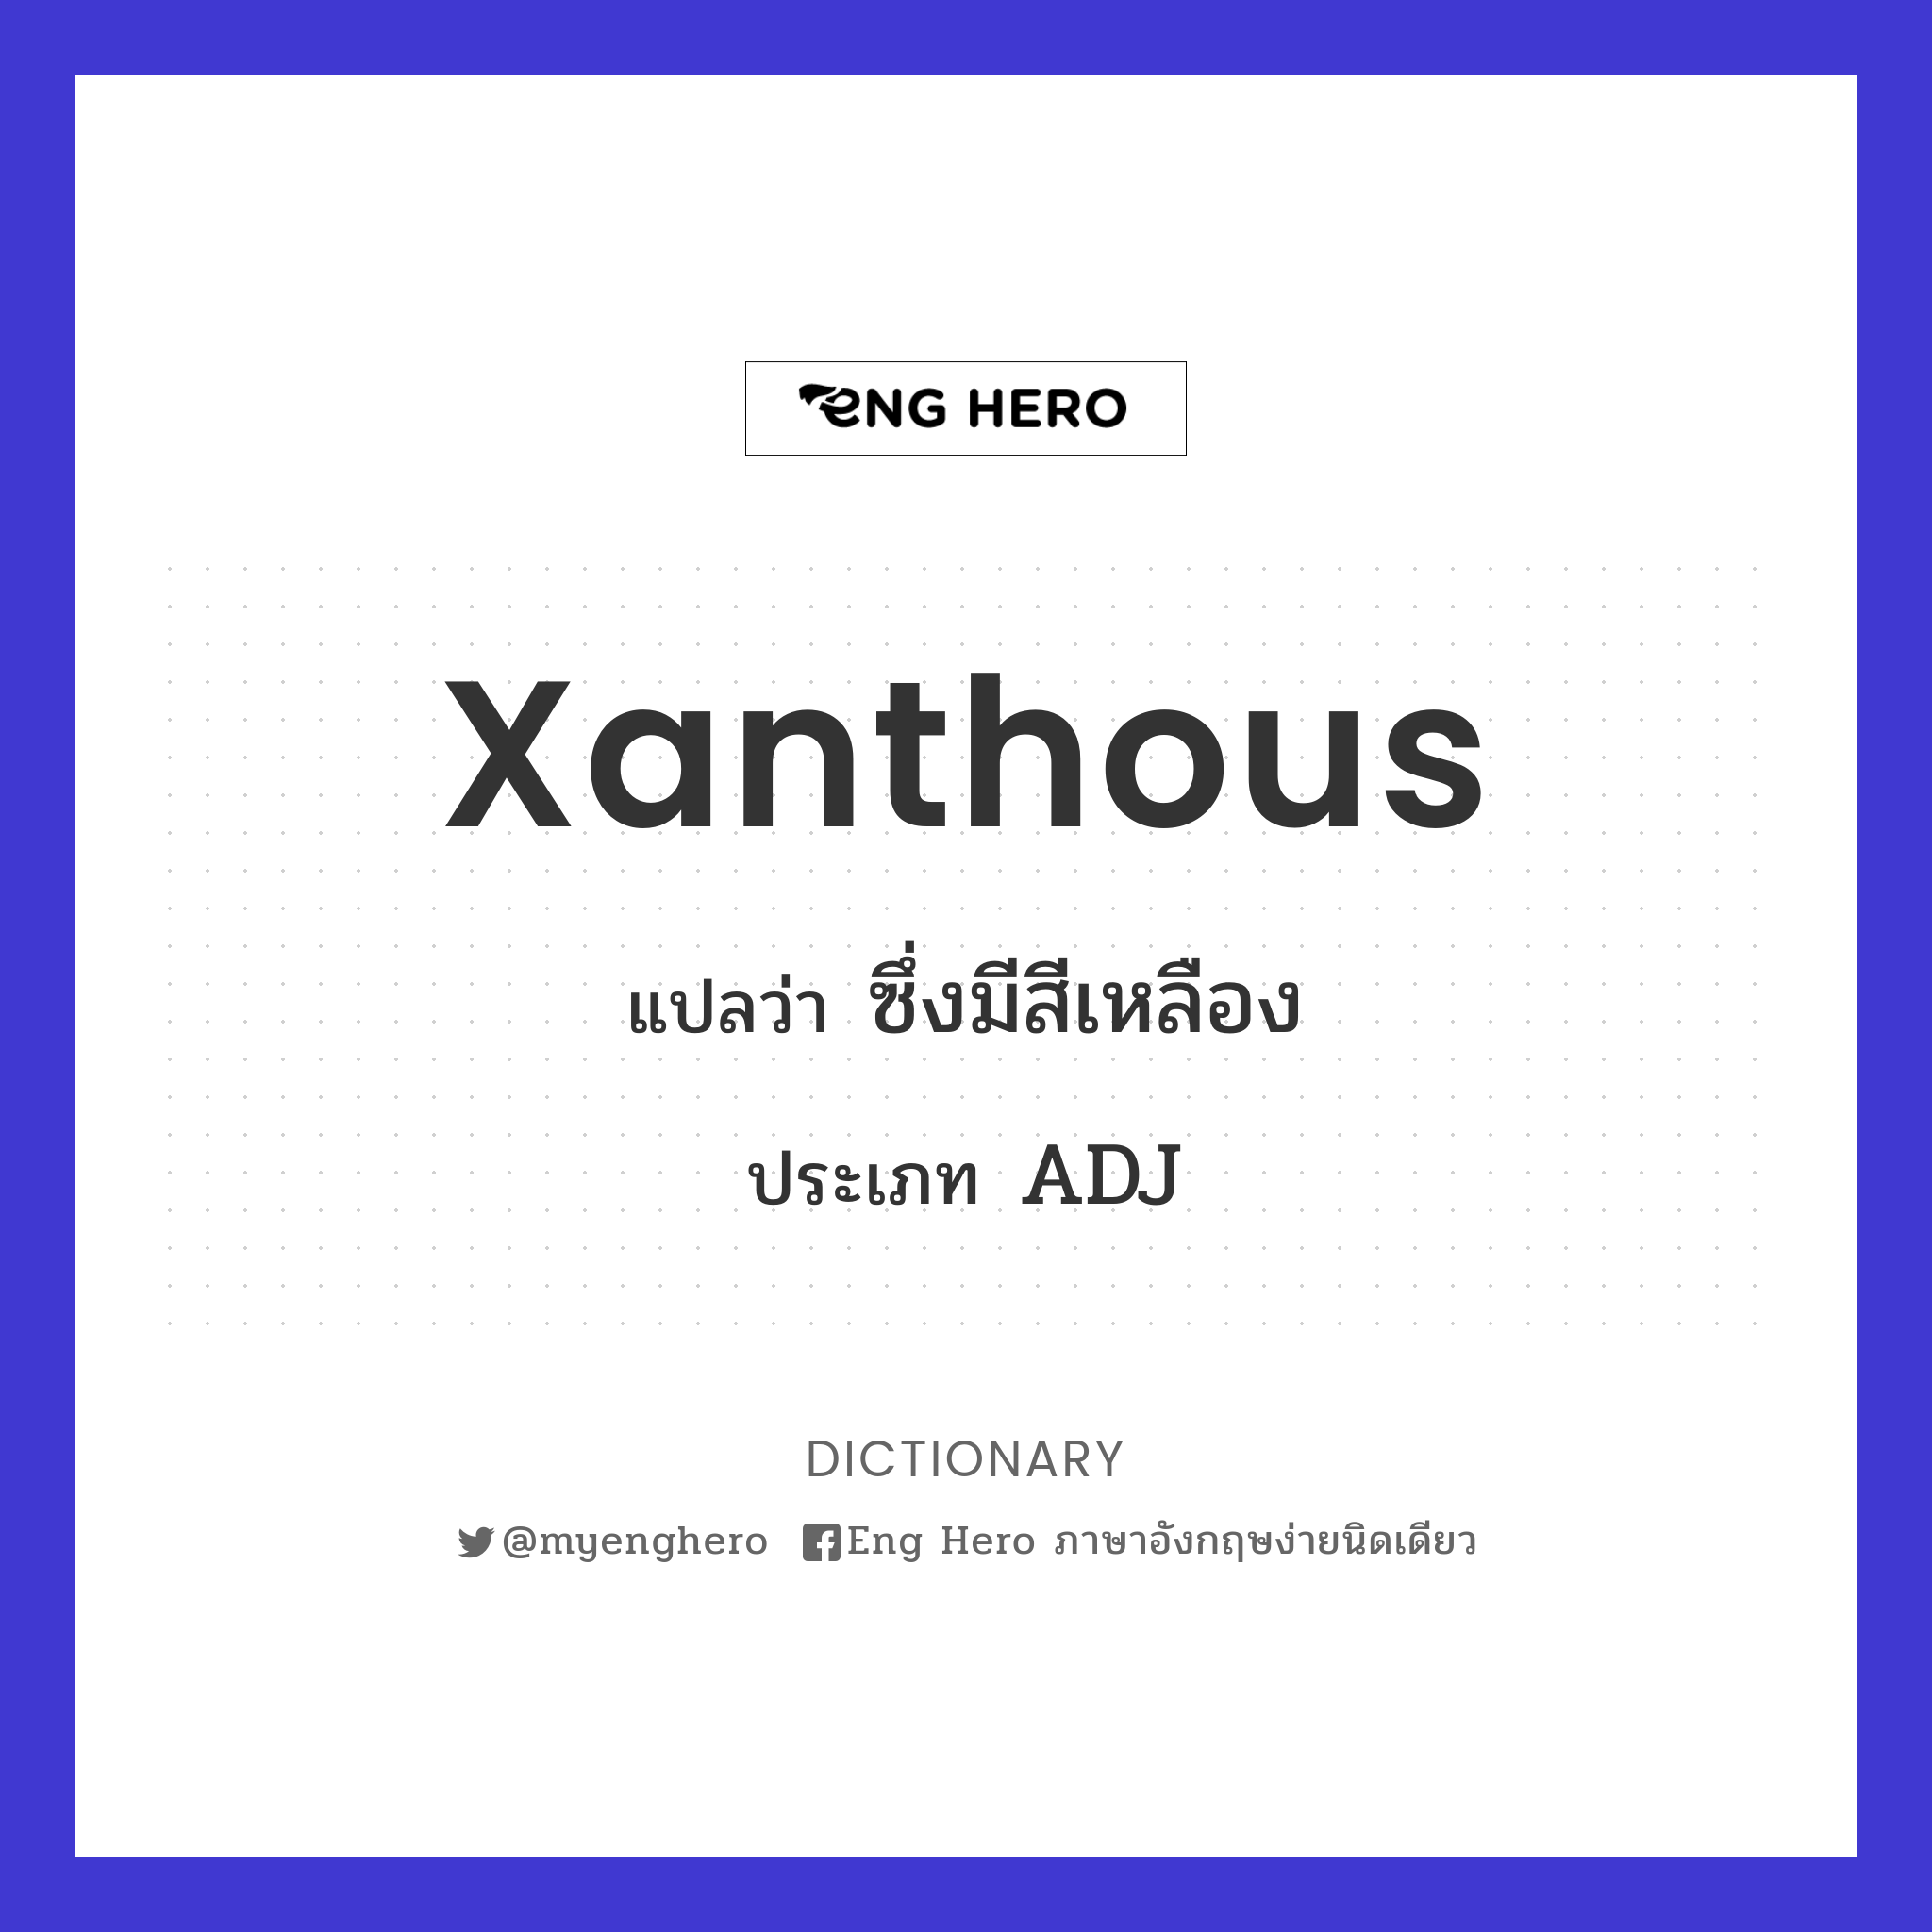 xanthous